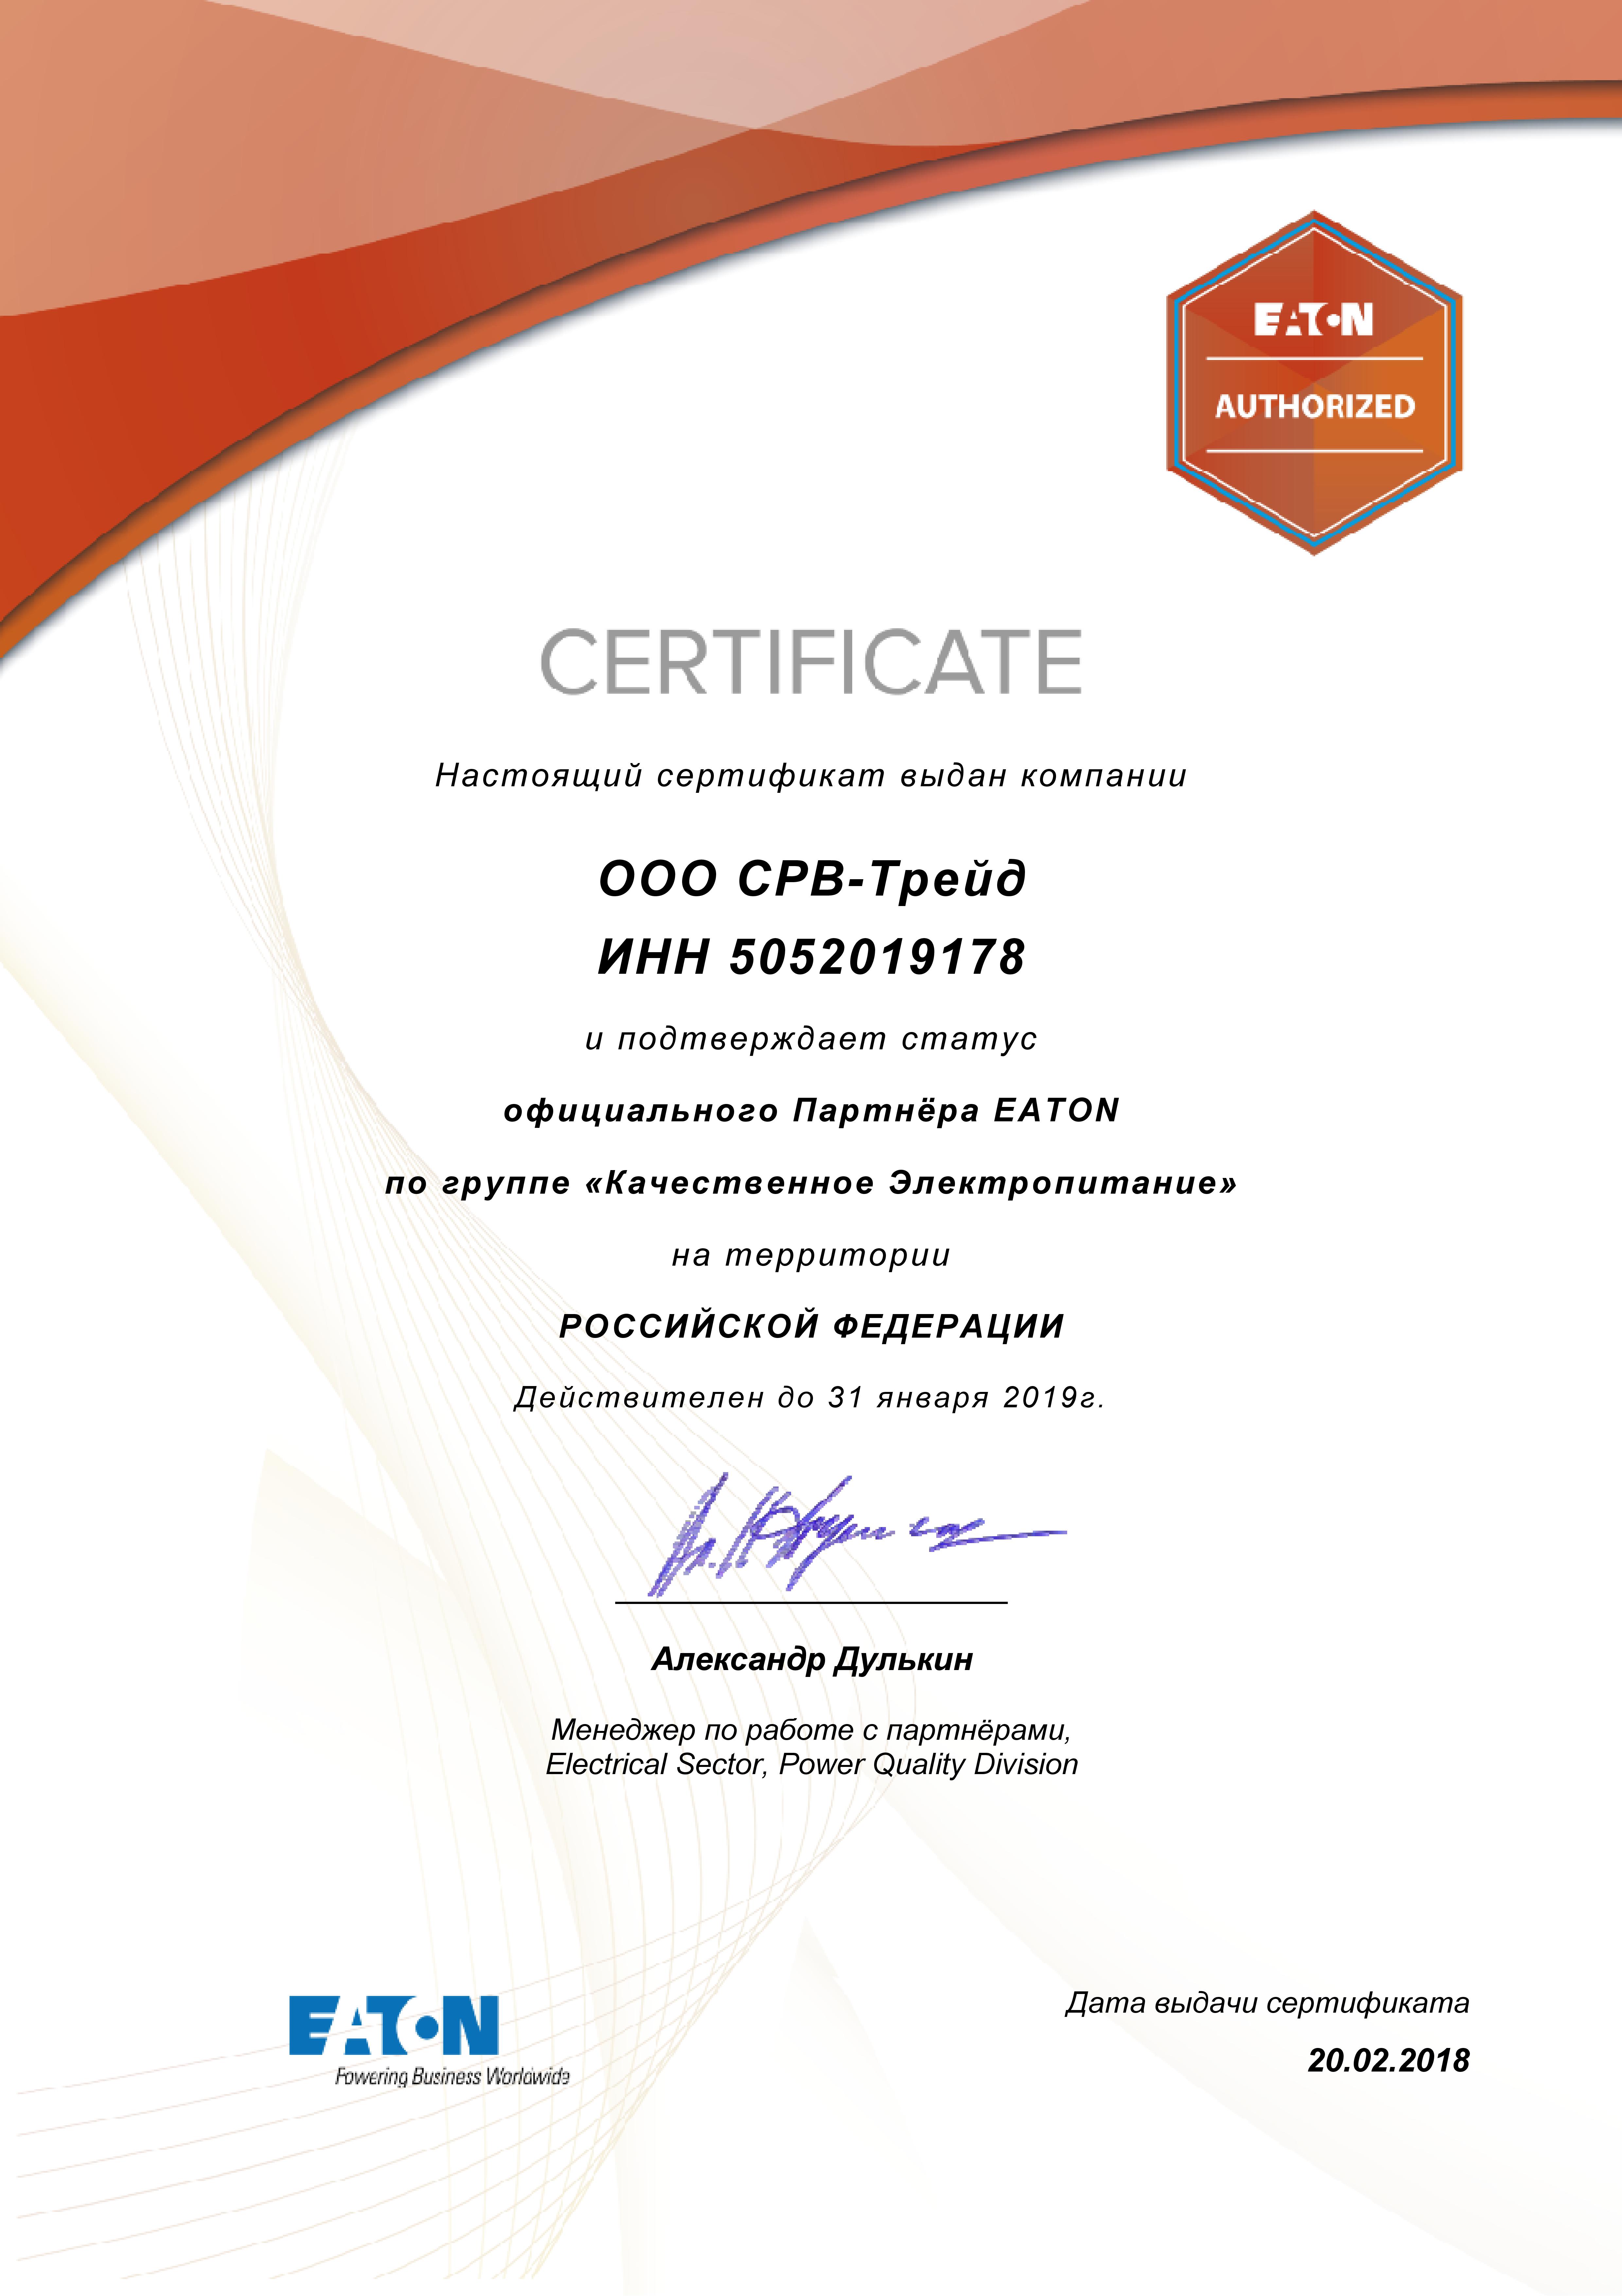 Сертификат SRV-TRADE как партнера Eaton